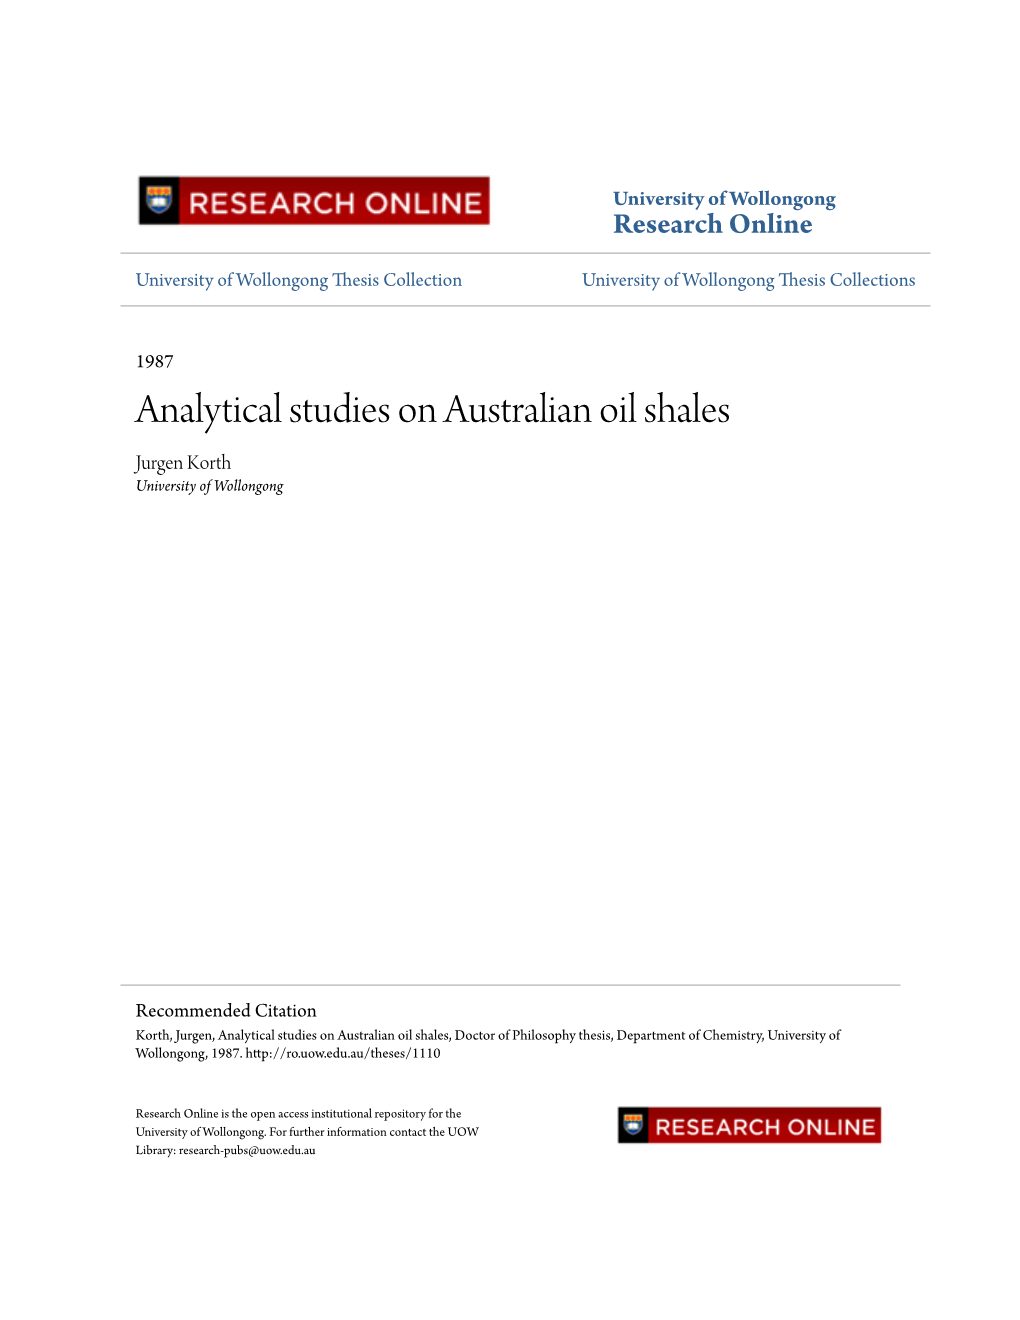 Analytical Studies on Australian Oil Shales Jurgen Korth University of Wollongong